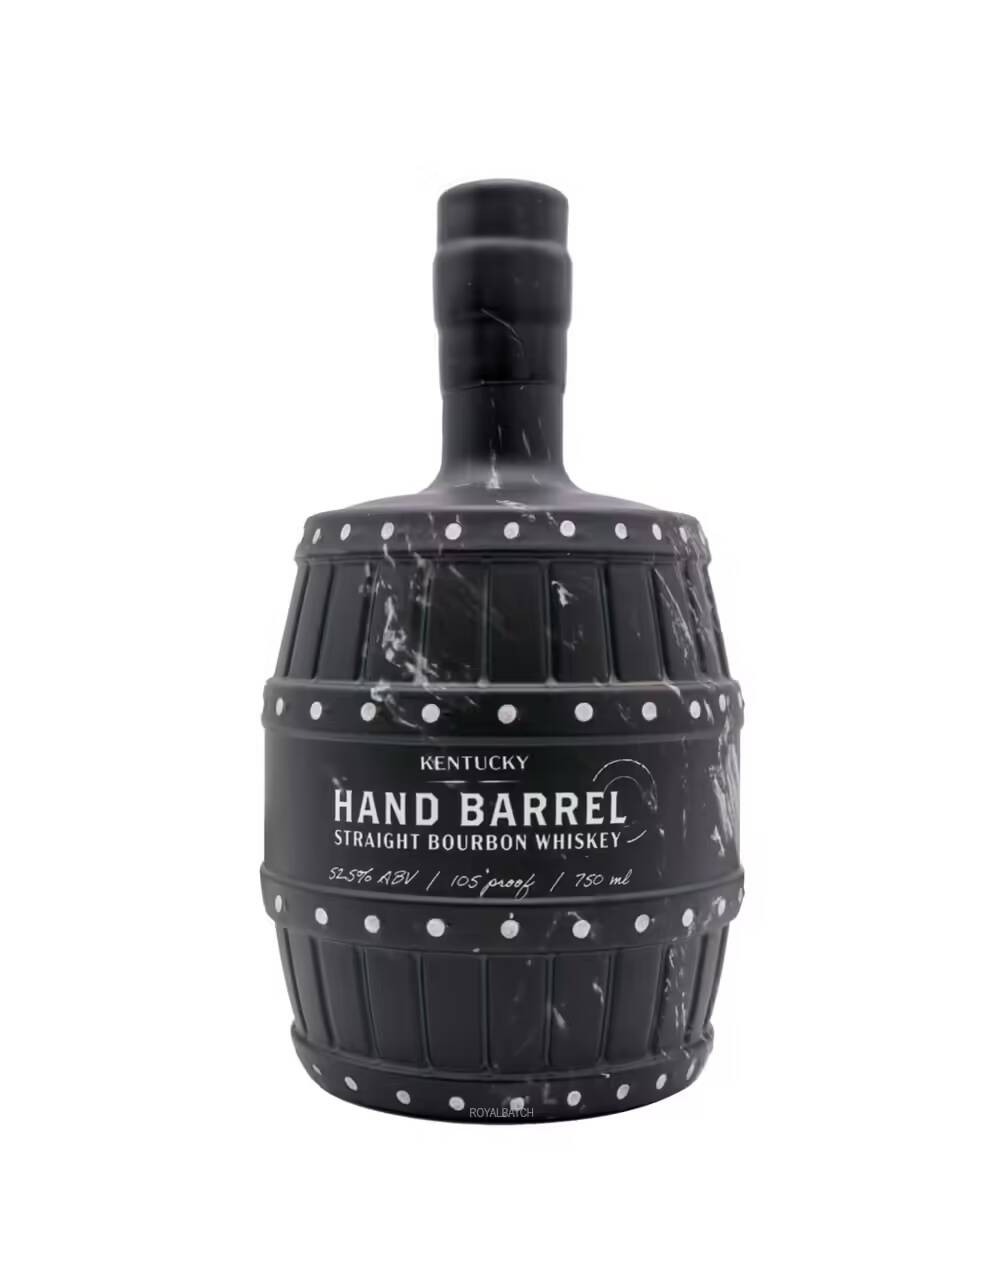 Hand Barrel Double Oak Kentucky Straight Bourbon Whiskey